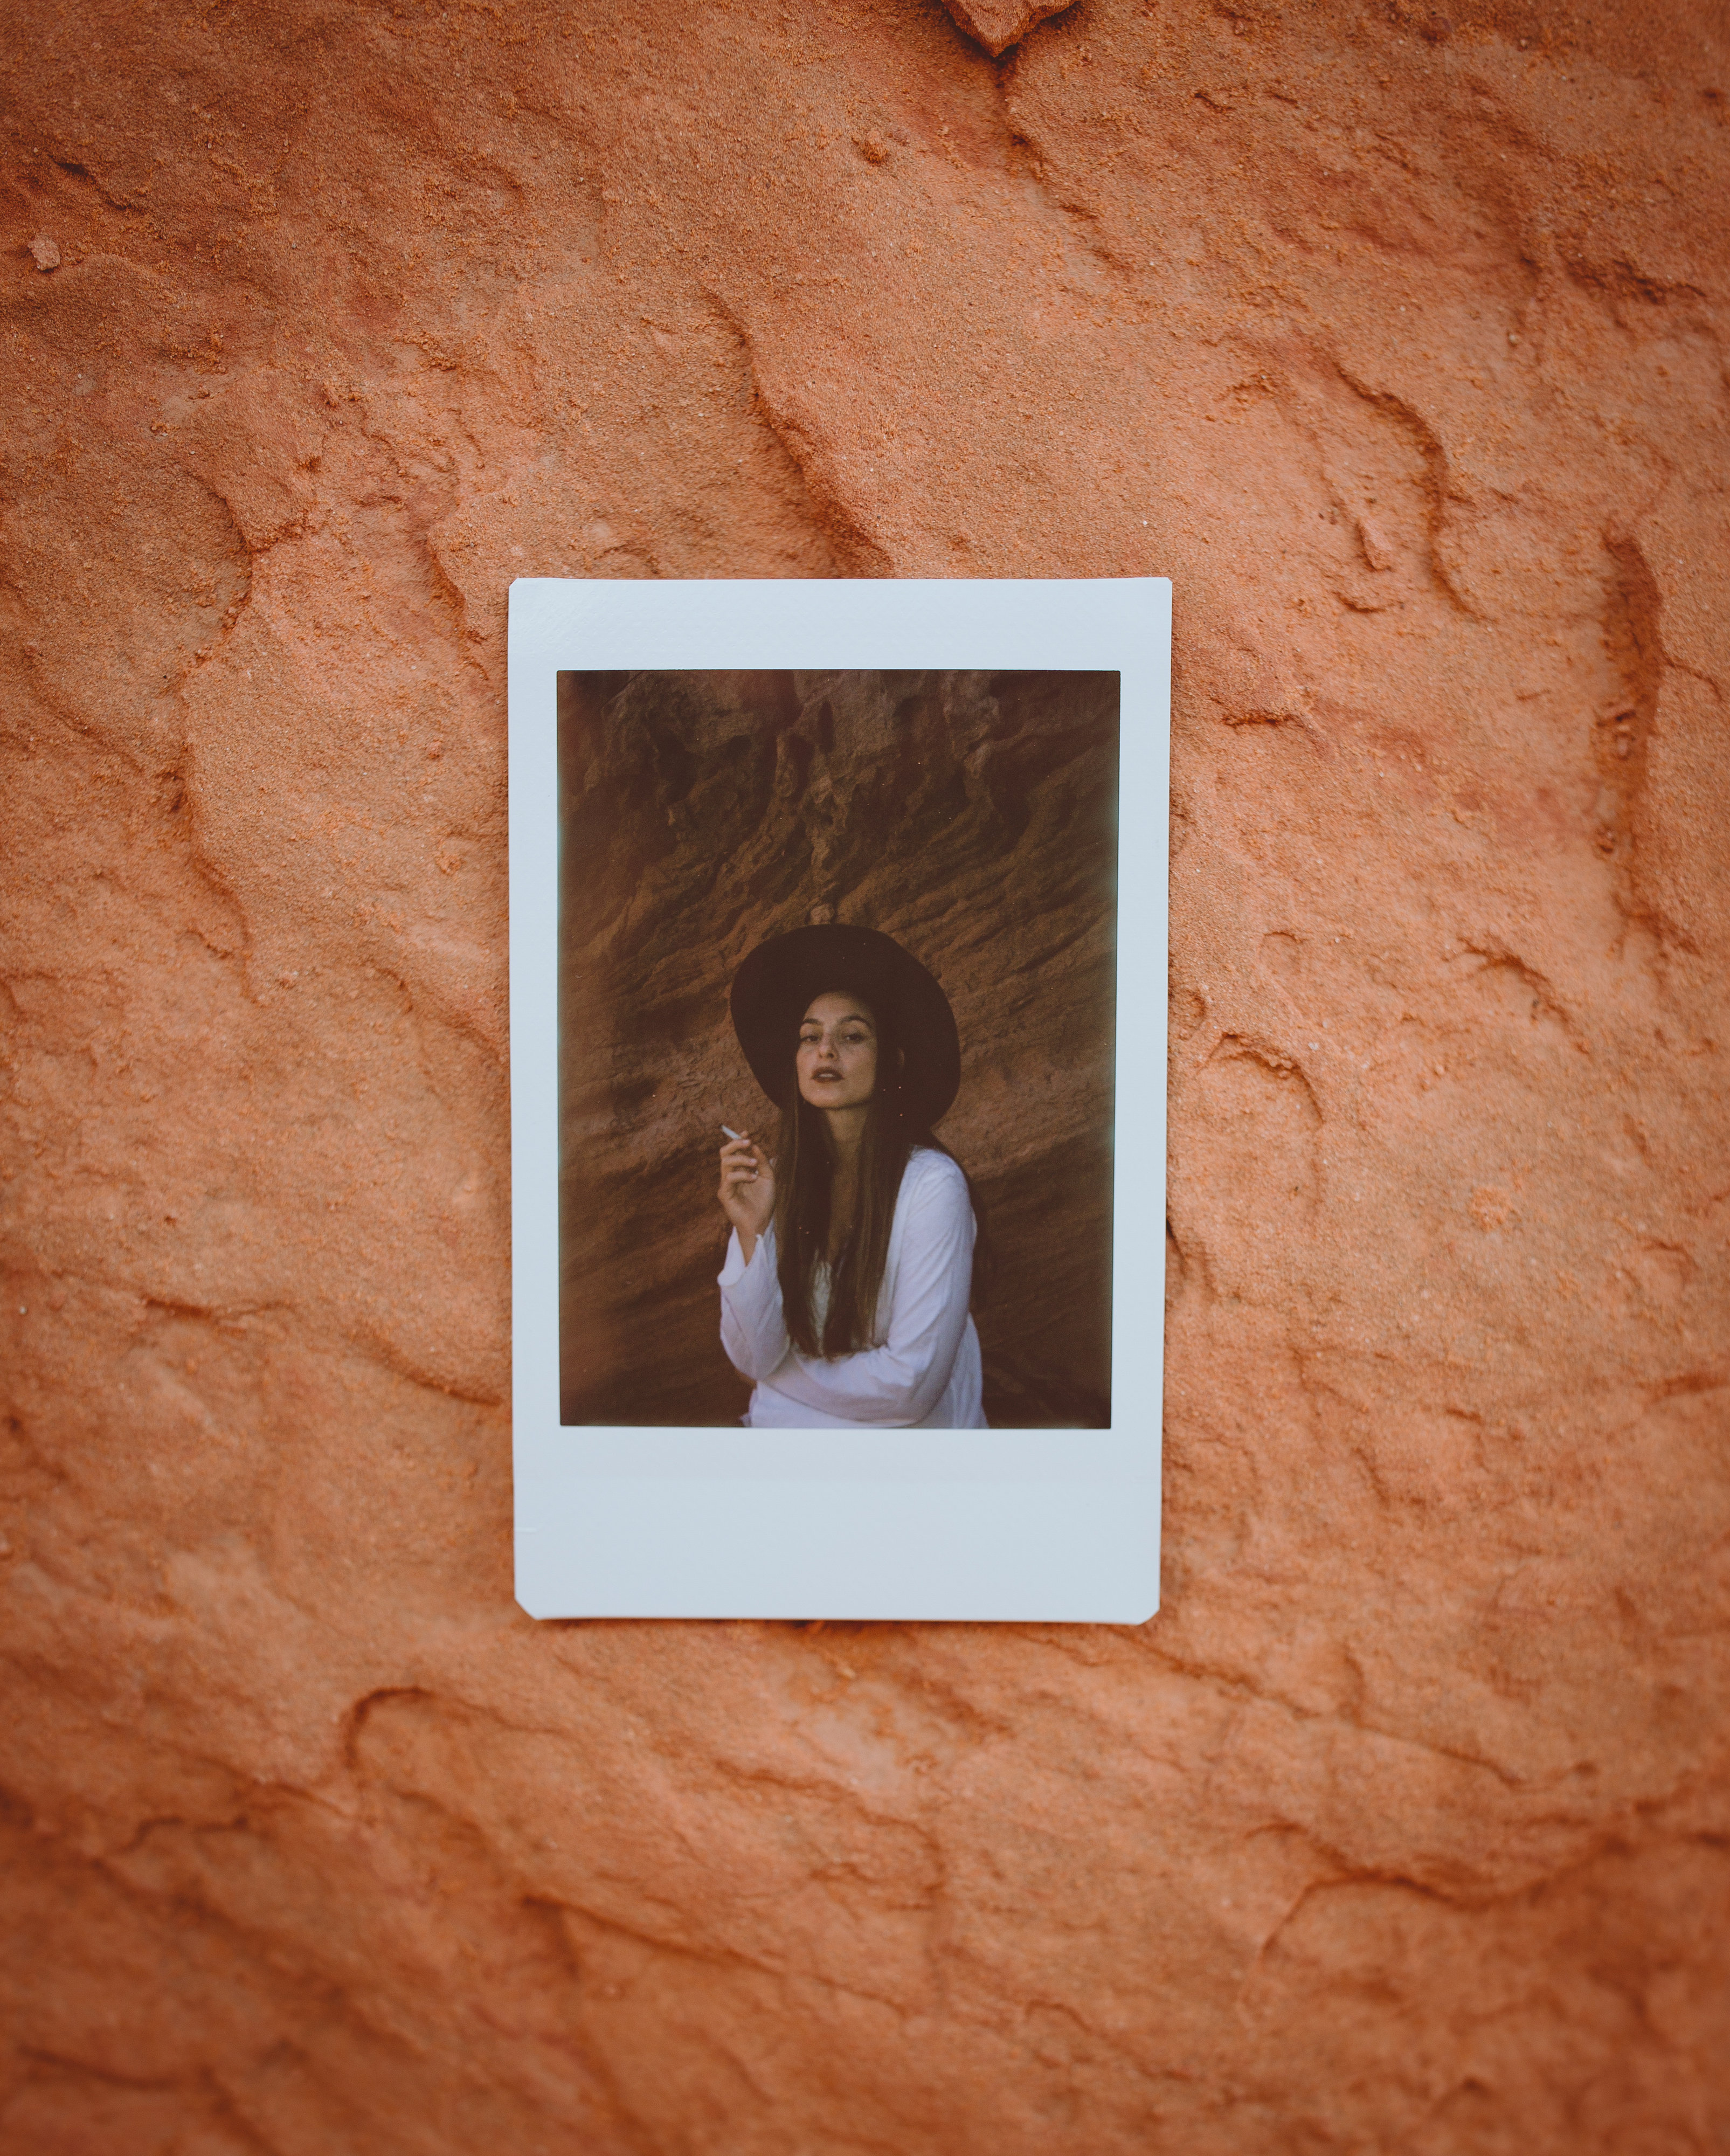 LIFESTYLE photos: Marlboro Woman, Valley of Fire, Nevada